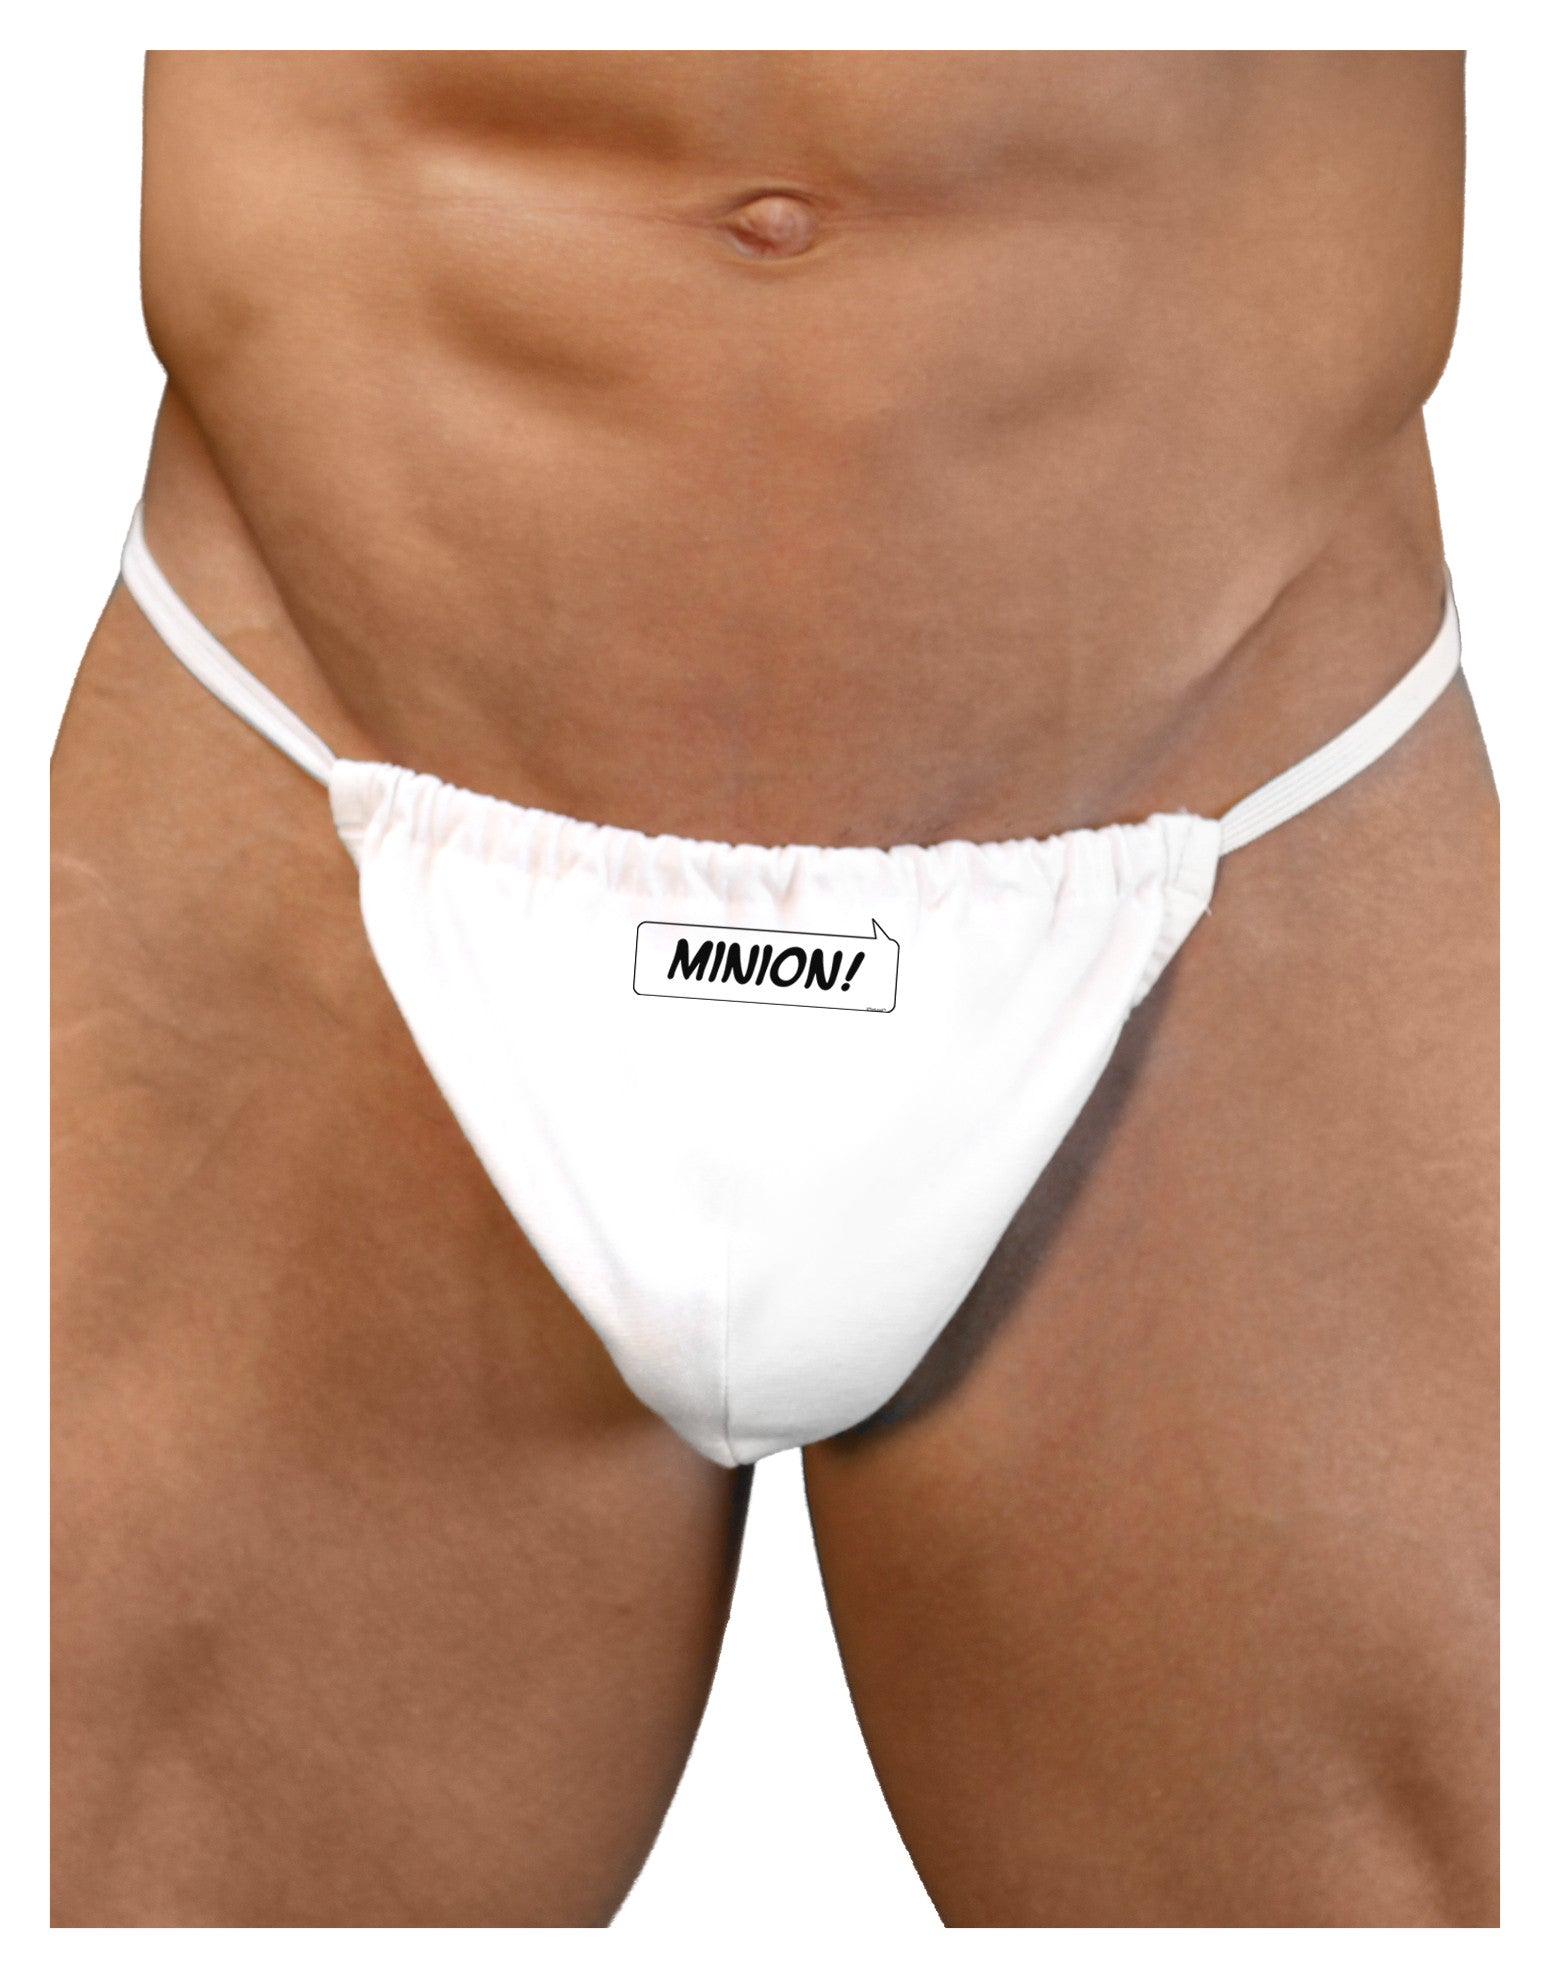 Minions Boxers Custom Photo Boxers Men's Underwear Plain White Boxers